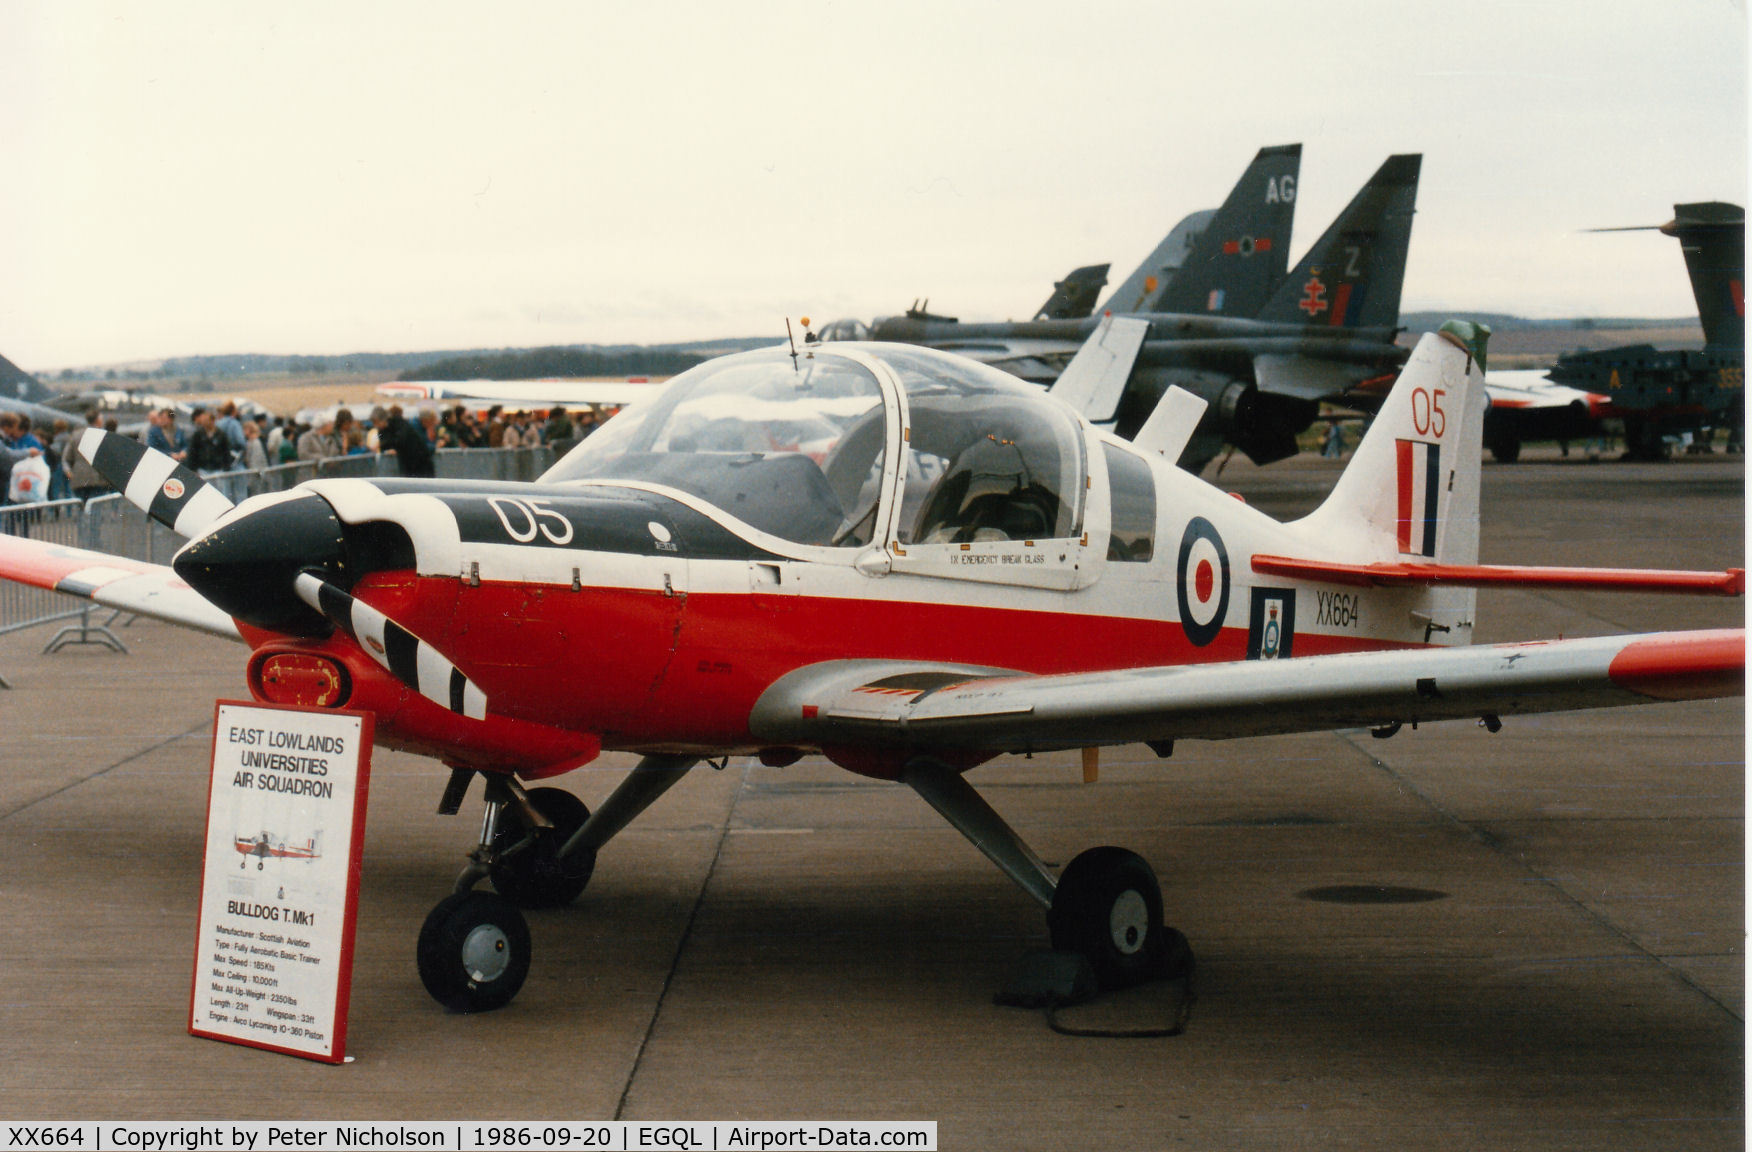 XX664, 1974 Scottish Aviation Bulldog T.1 C/N BH.120/322, Bulldog T.1 of the East Lowlands Universities Air Squadron on display at the 1986 RAF Leuchars Airshow.